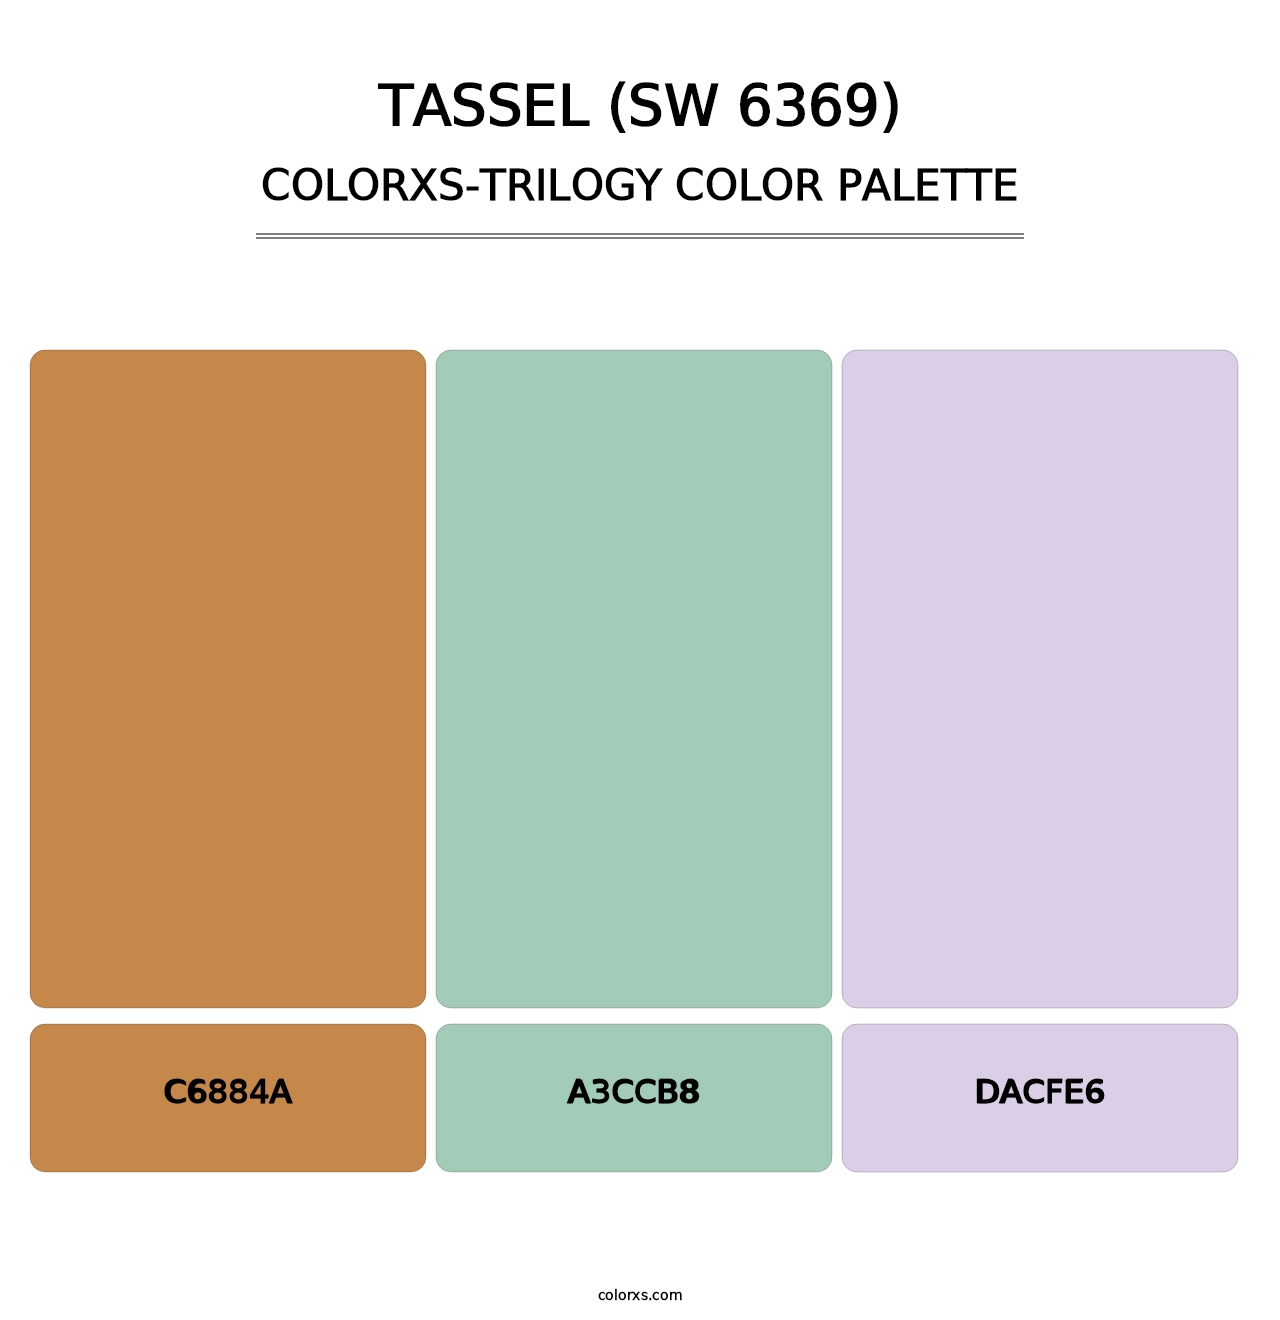 Tassel (SW 6369) - Colorxs Trilogy Palette